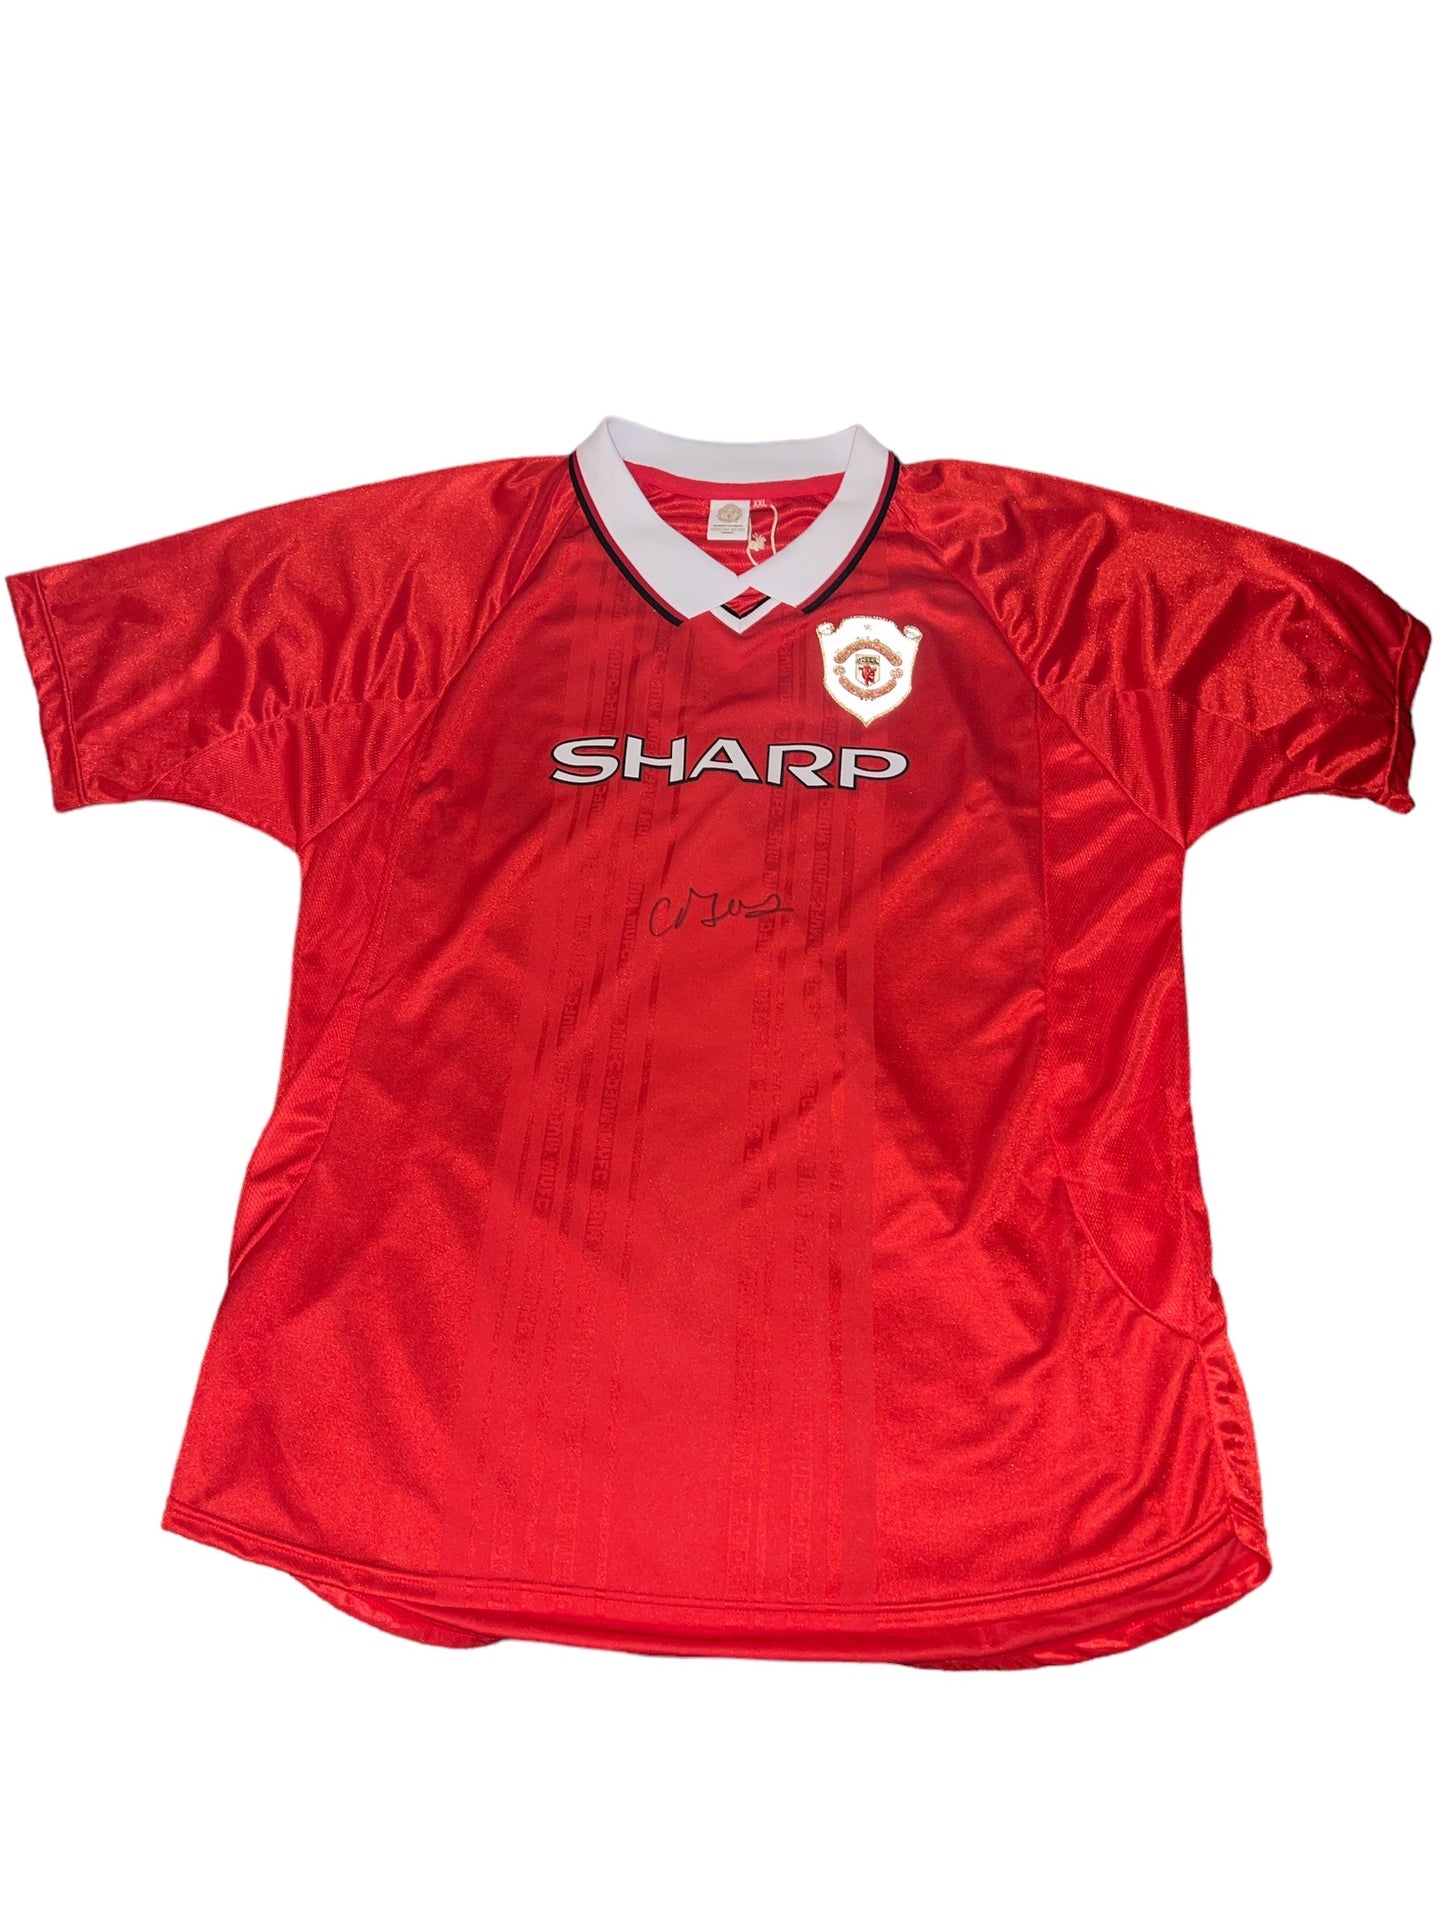 Sir Alex Ferguson Signed Manchester United 1999 Shirt